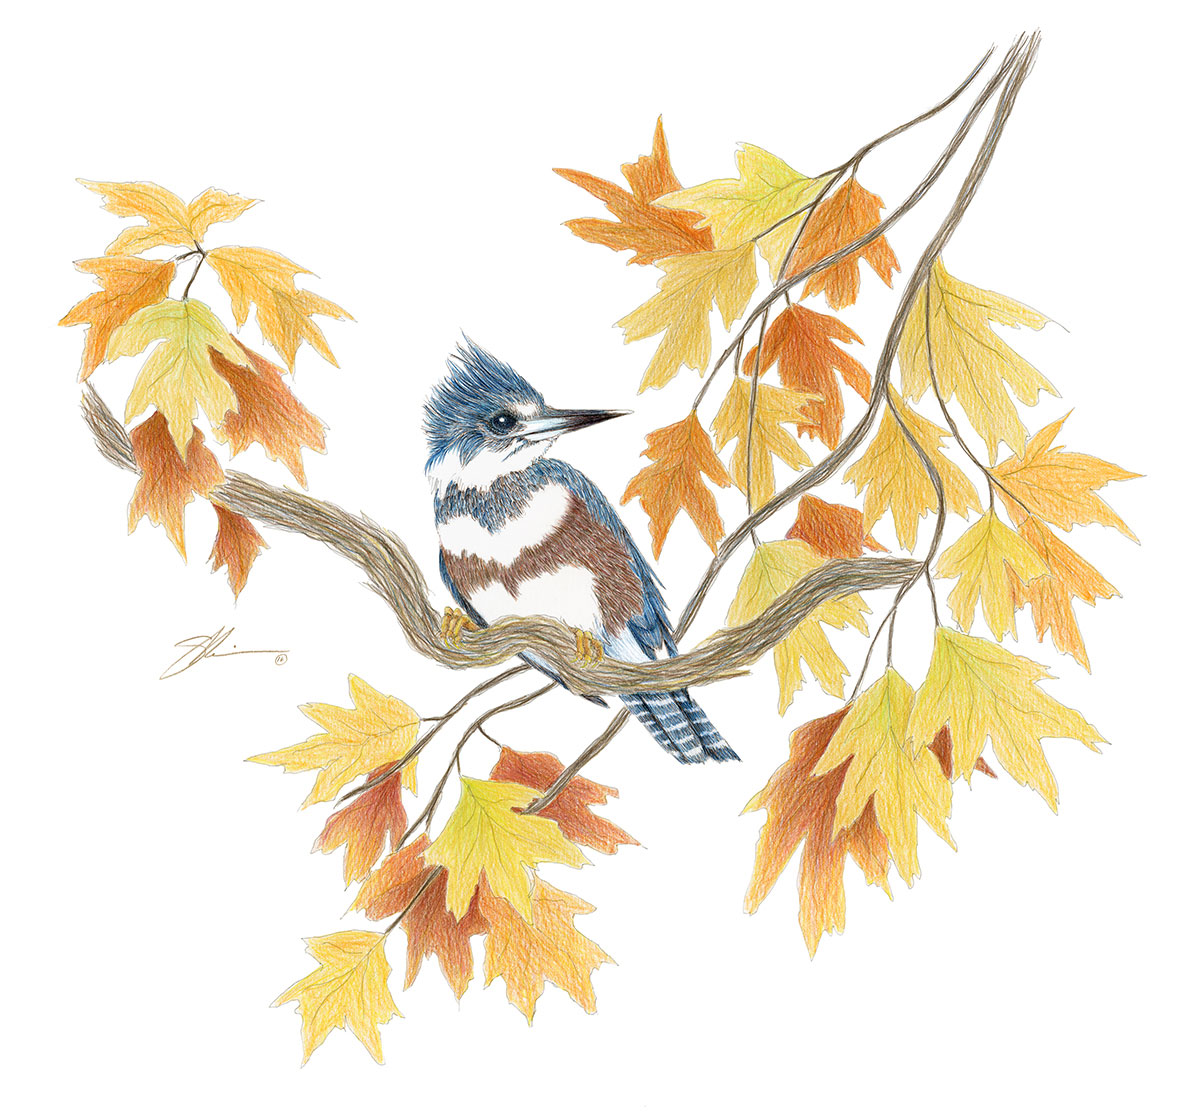 The Heronswood Kingfisher